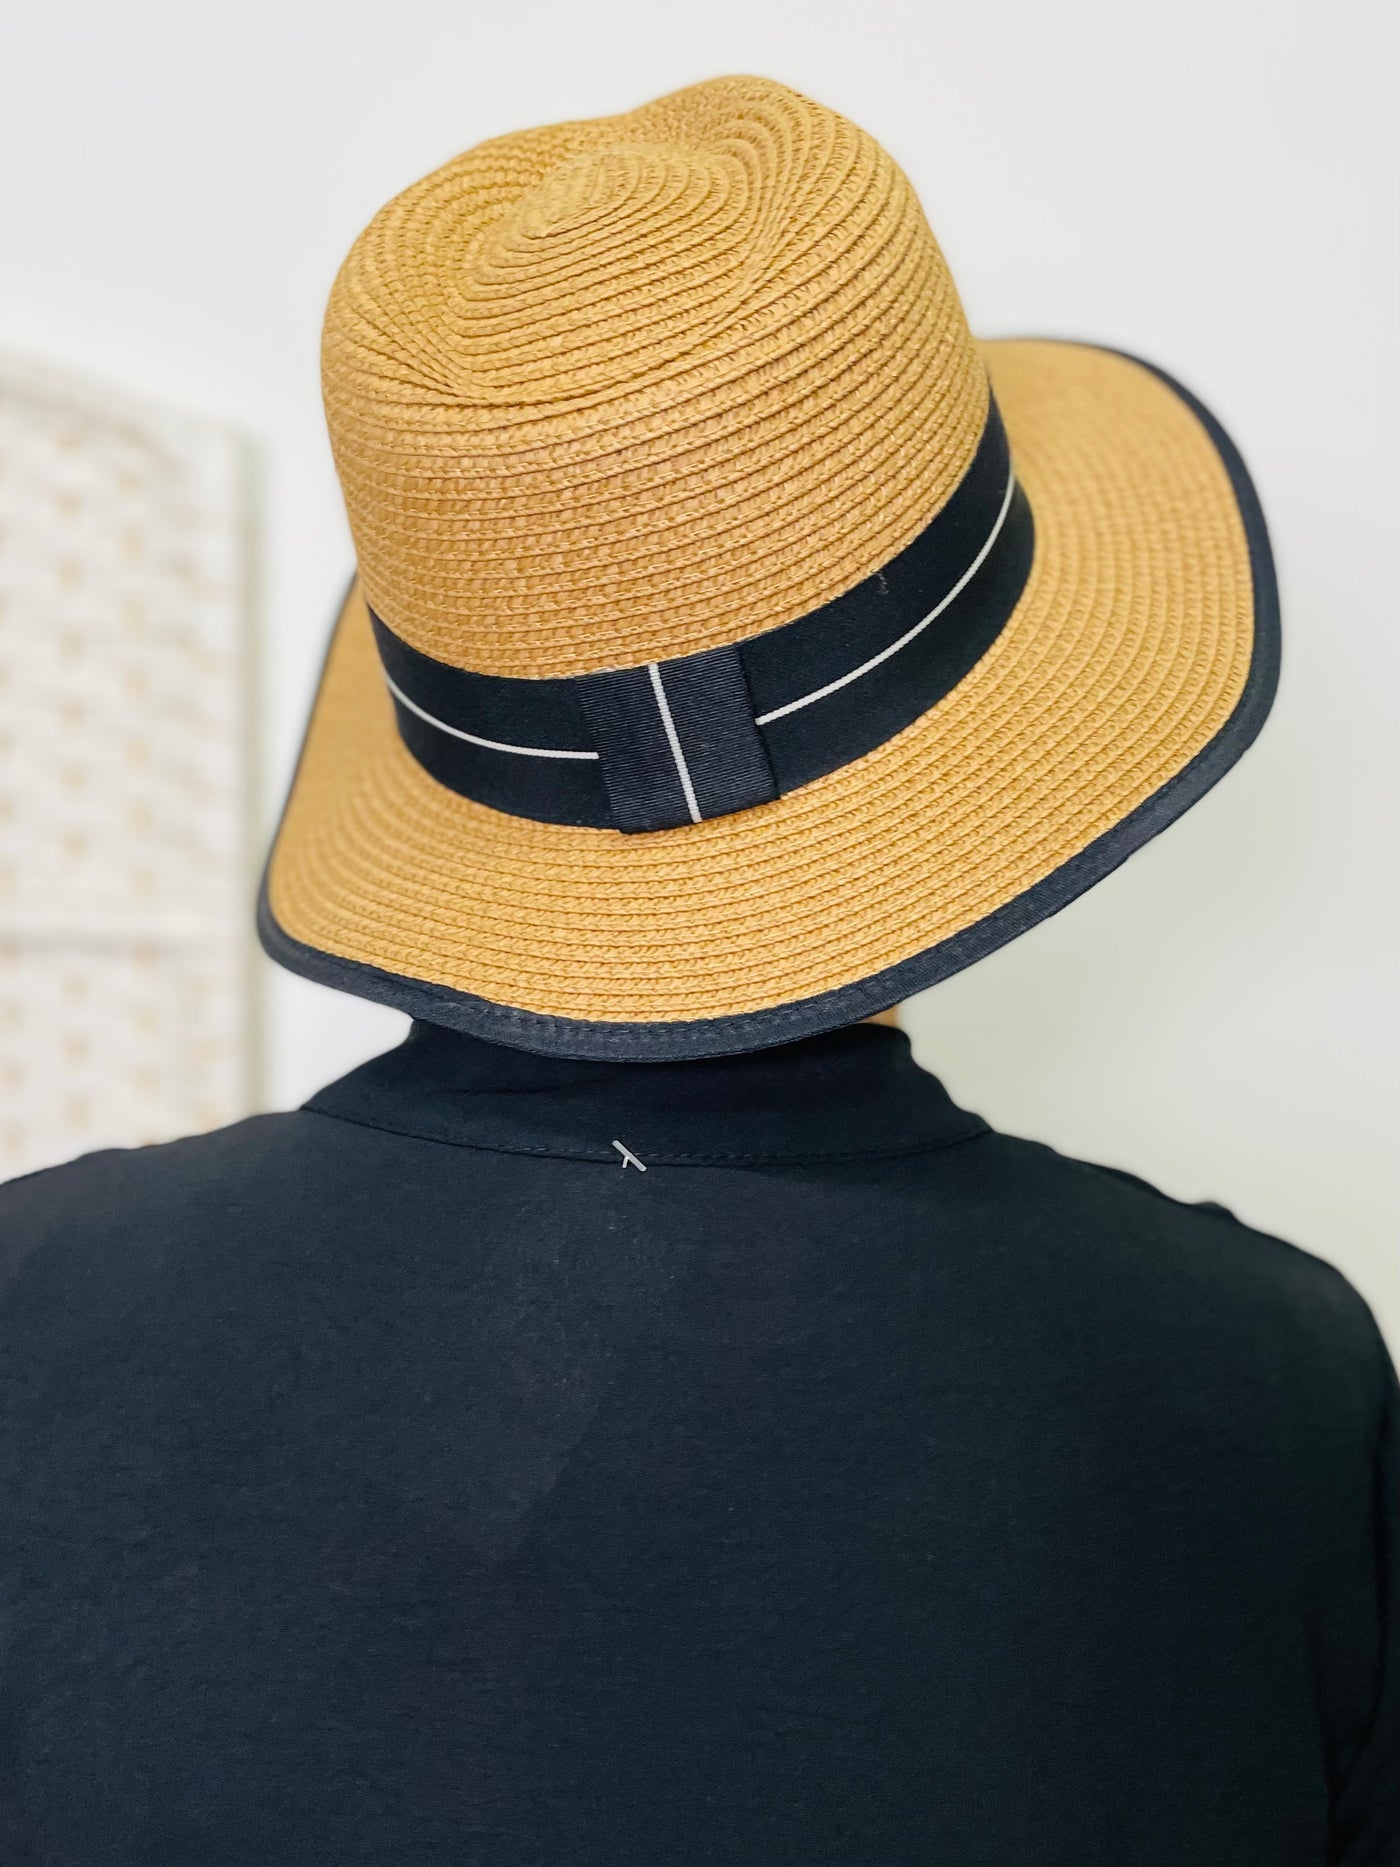 Panama Sun Hat-Camel & Black